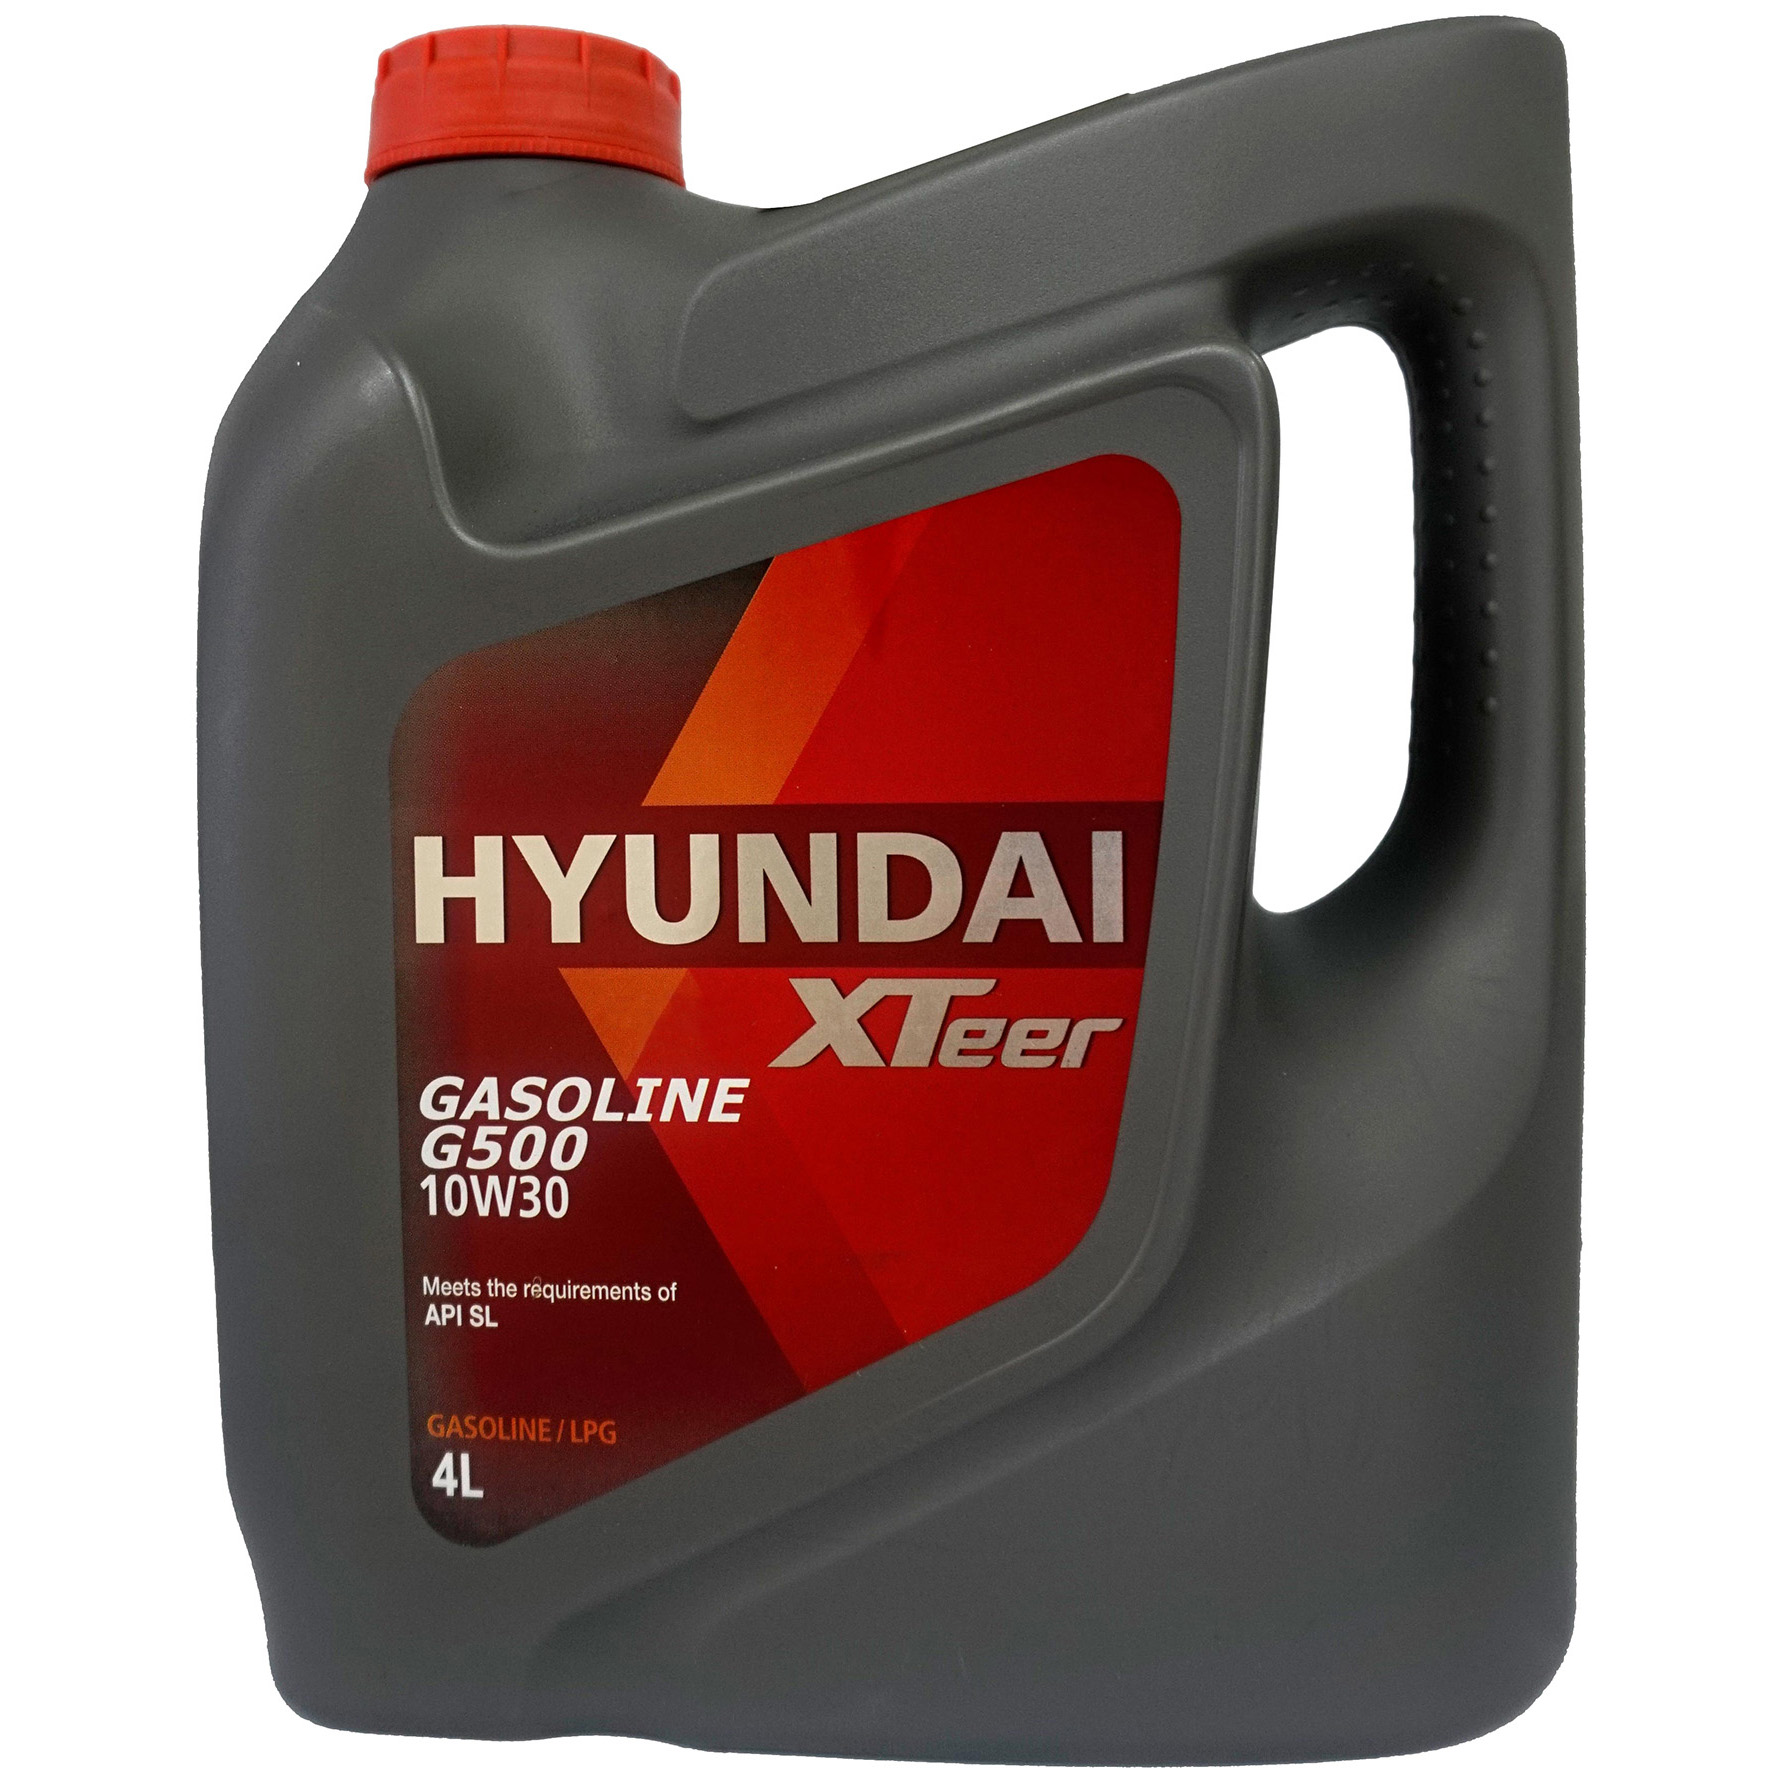 фото Hyundai xteer масло моторное gasoline g500 10w30 4l api sl synthetic